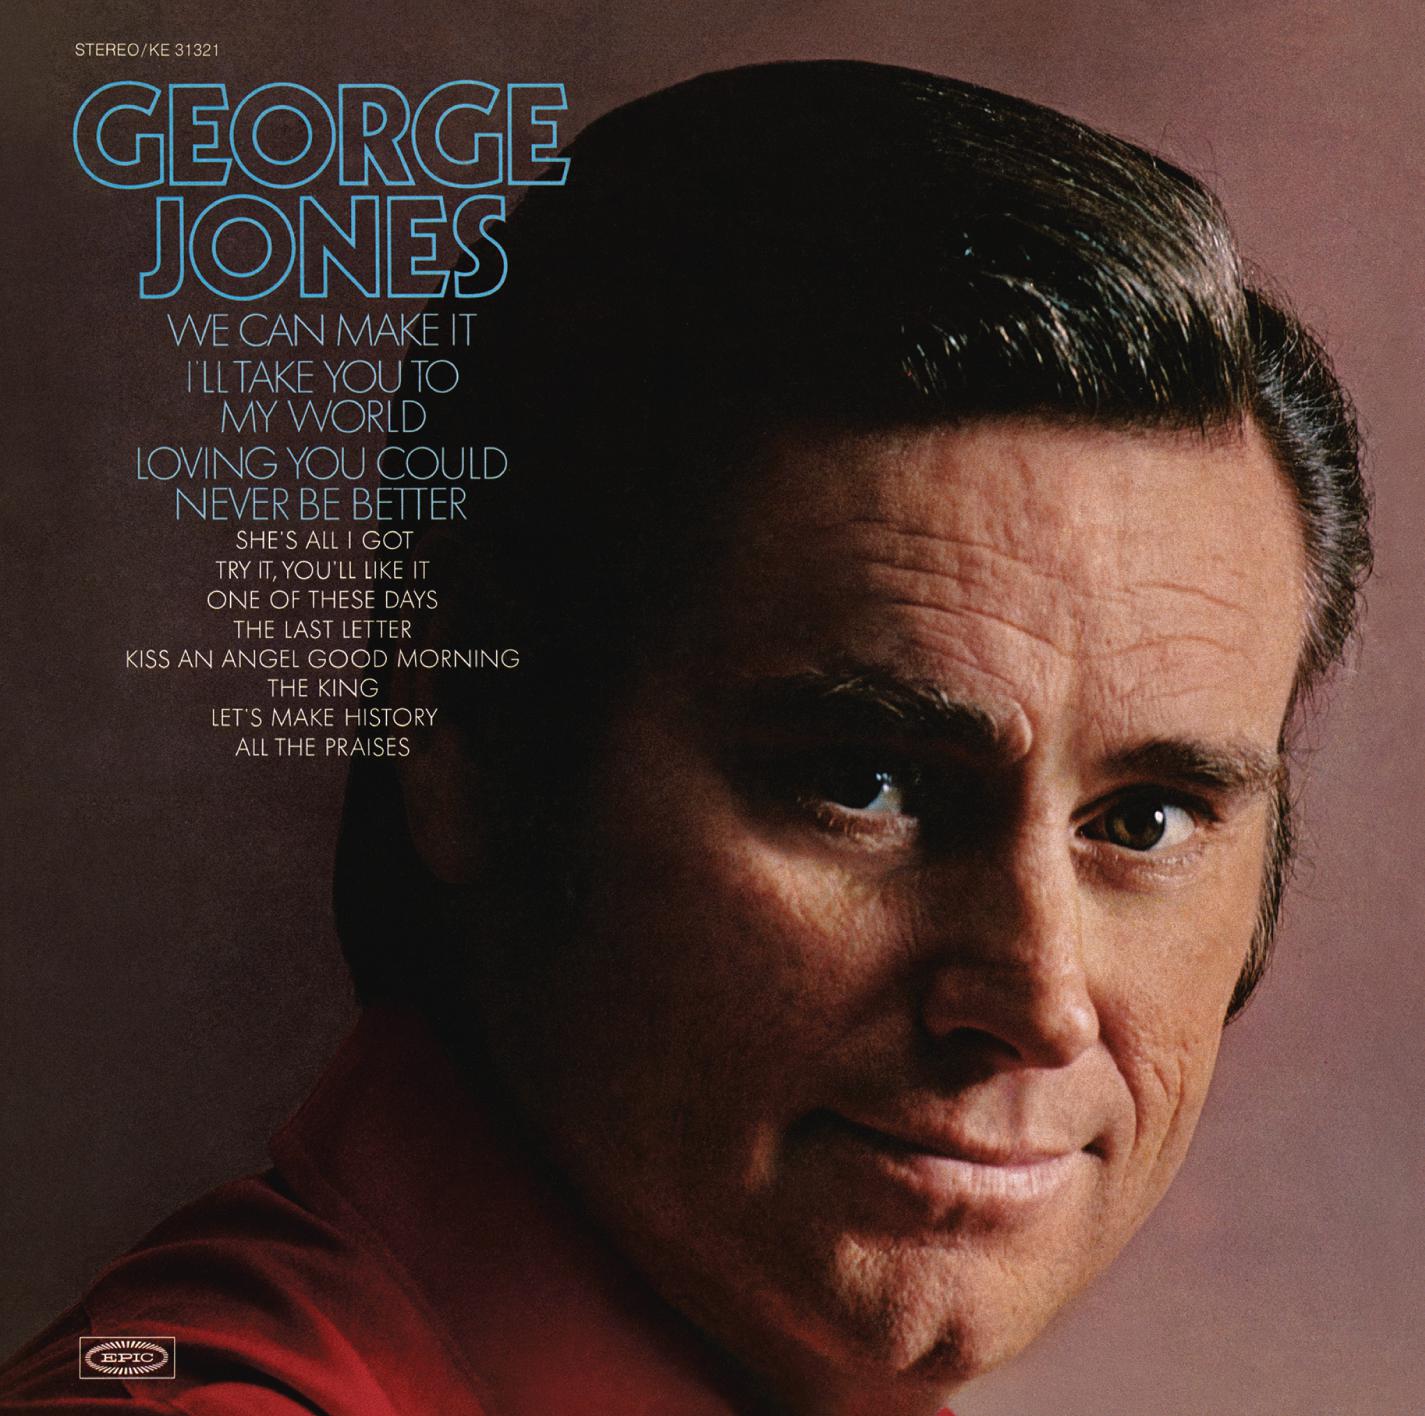 George Jones – George Jones (1972/2014) [HDTracks FLAC 24bit/96kHz]